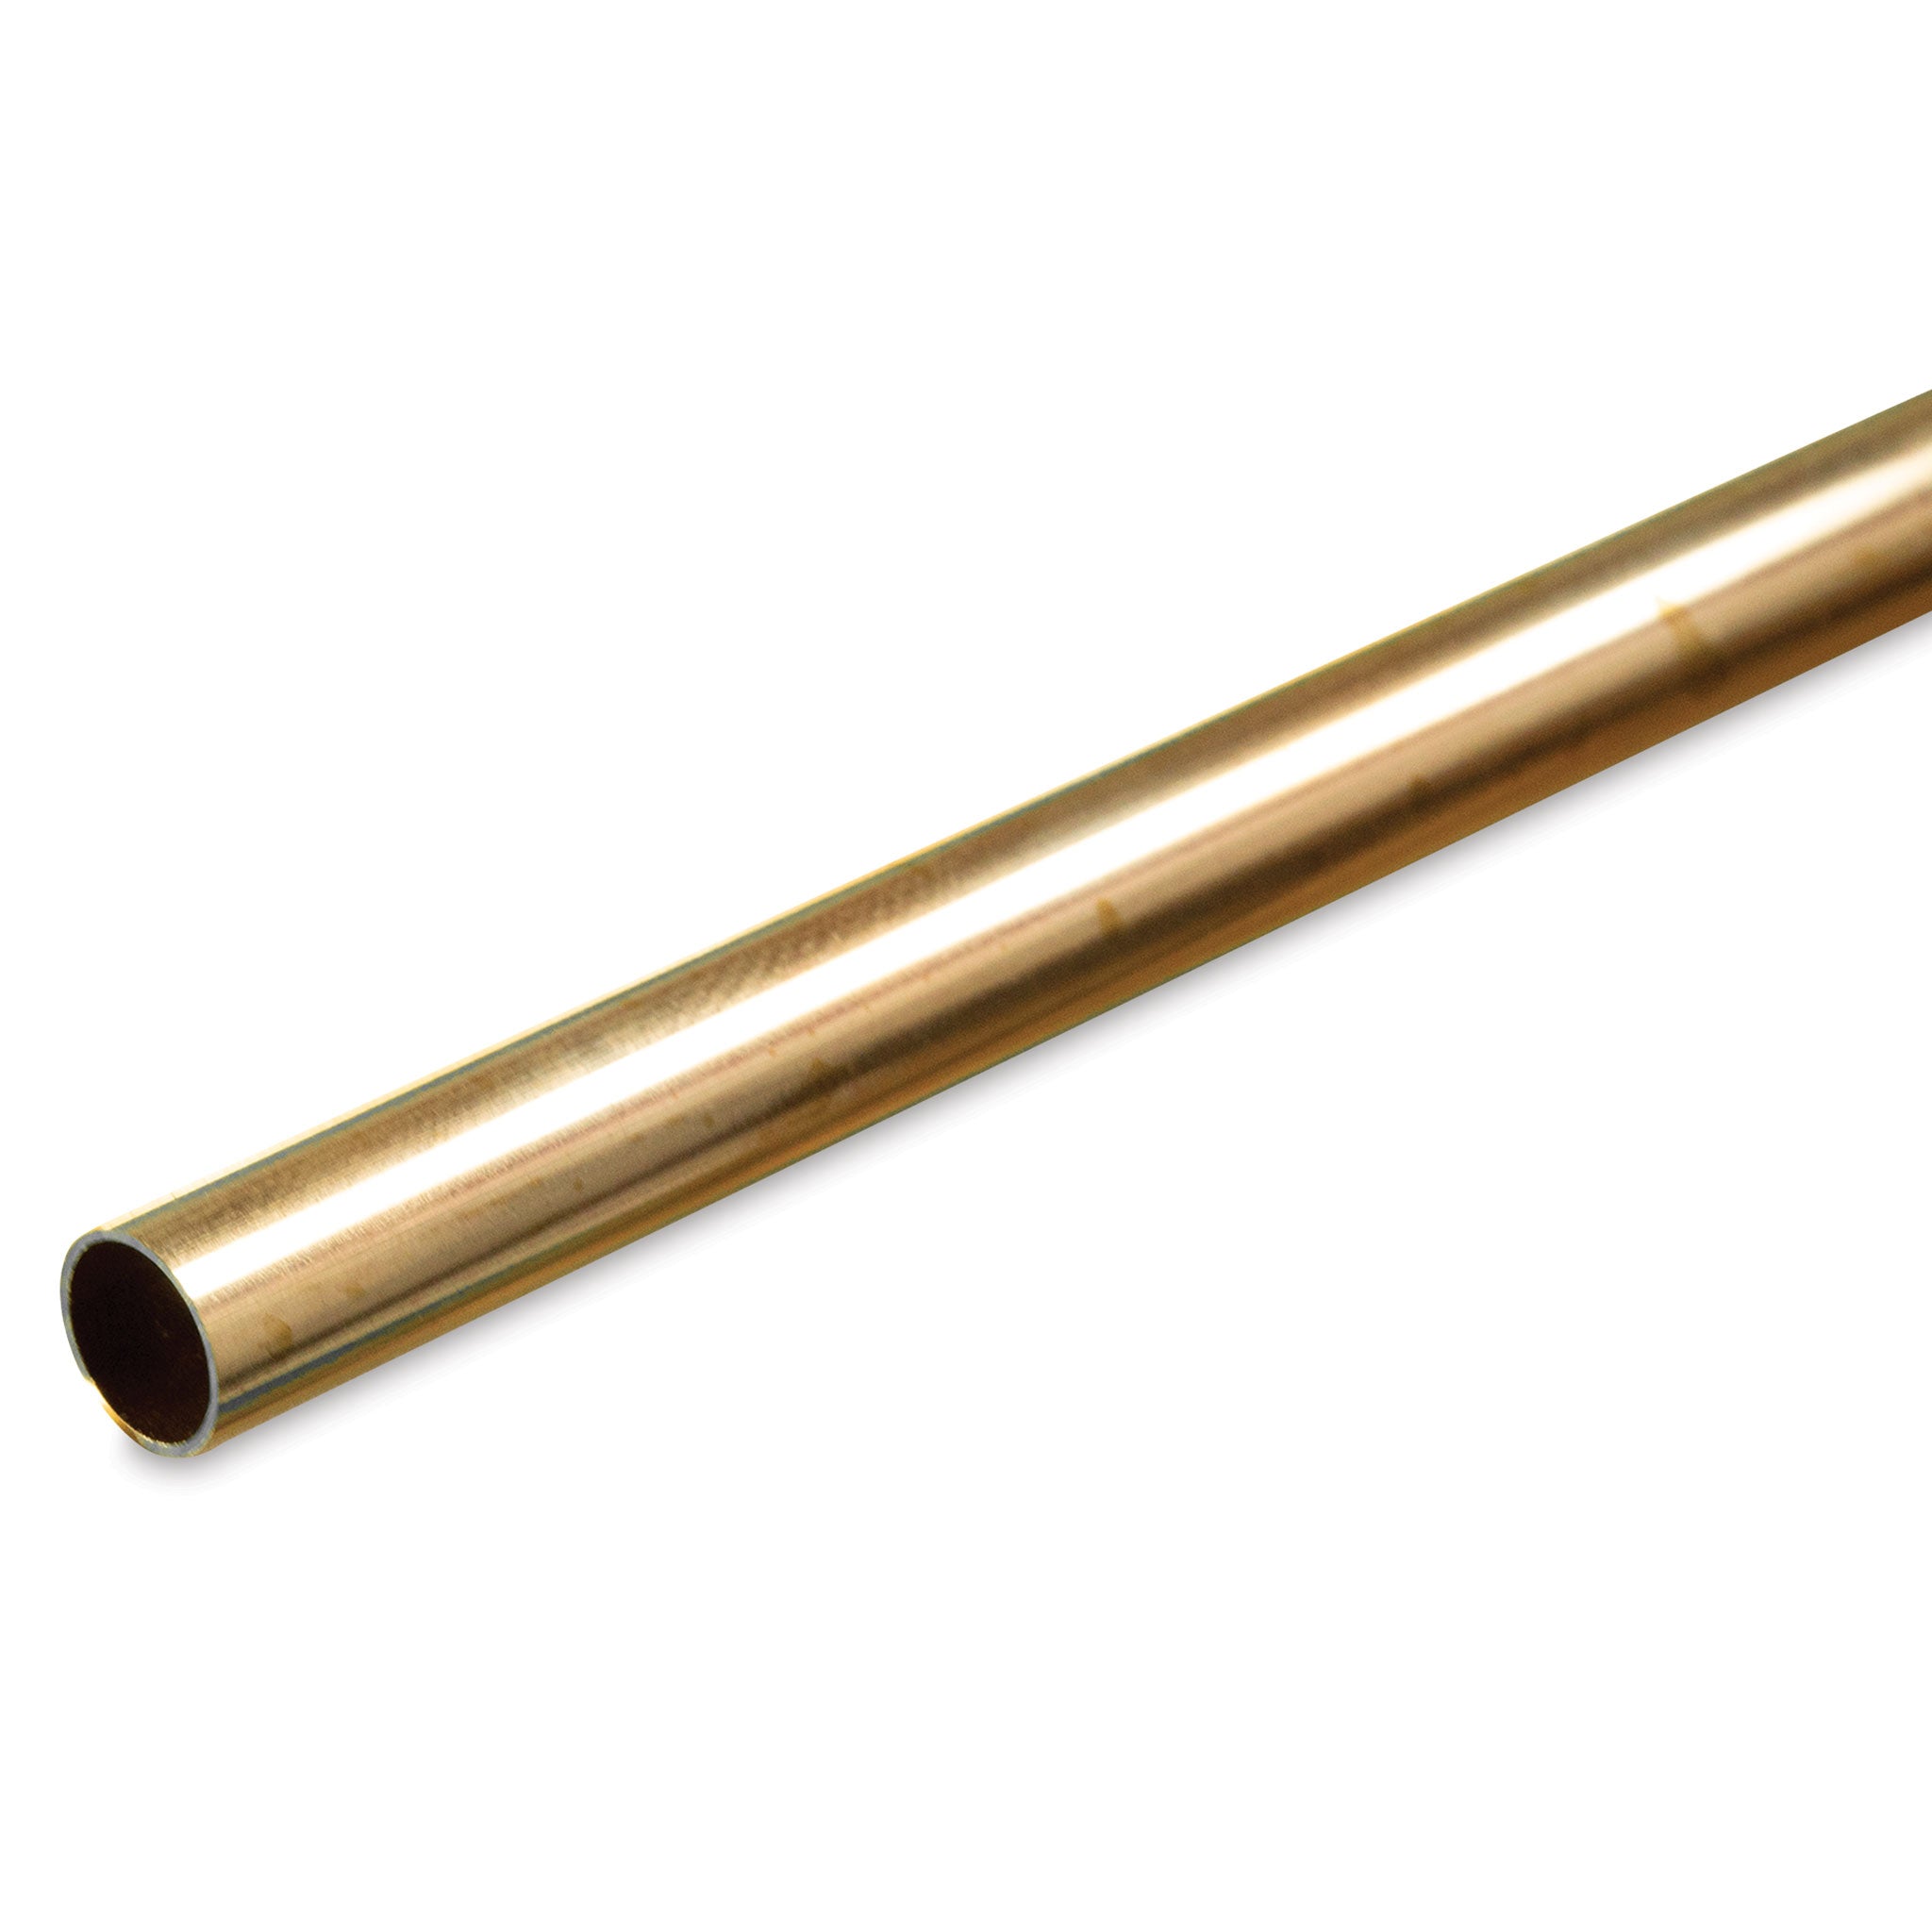 K&S Metals 1151 Round Brass Tube 5/16" OD x 0.014" Wall x 36" Long (1 Piece)